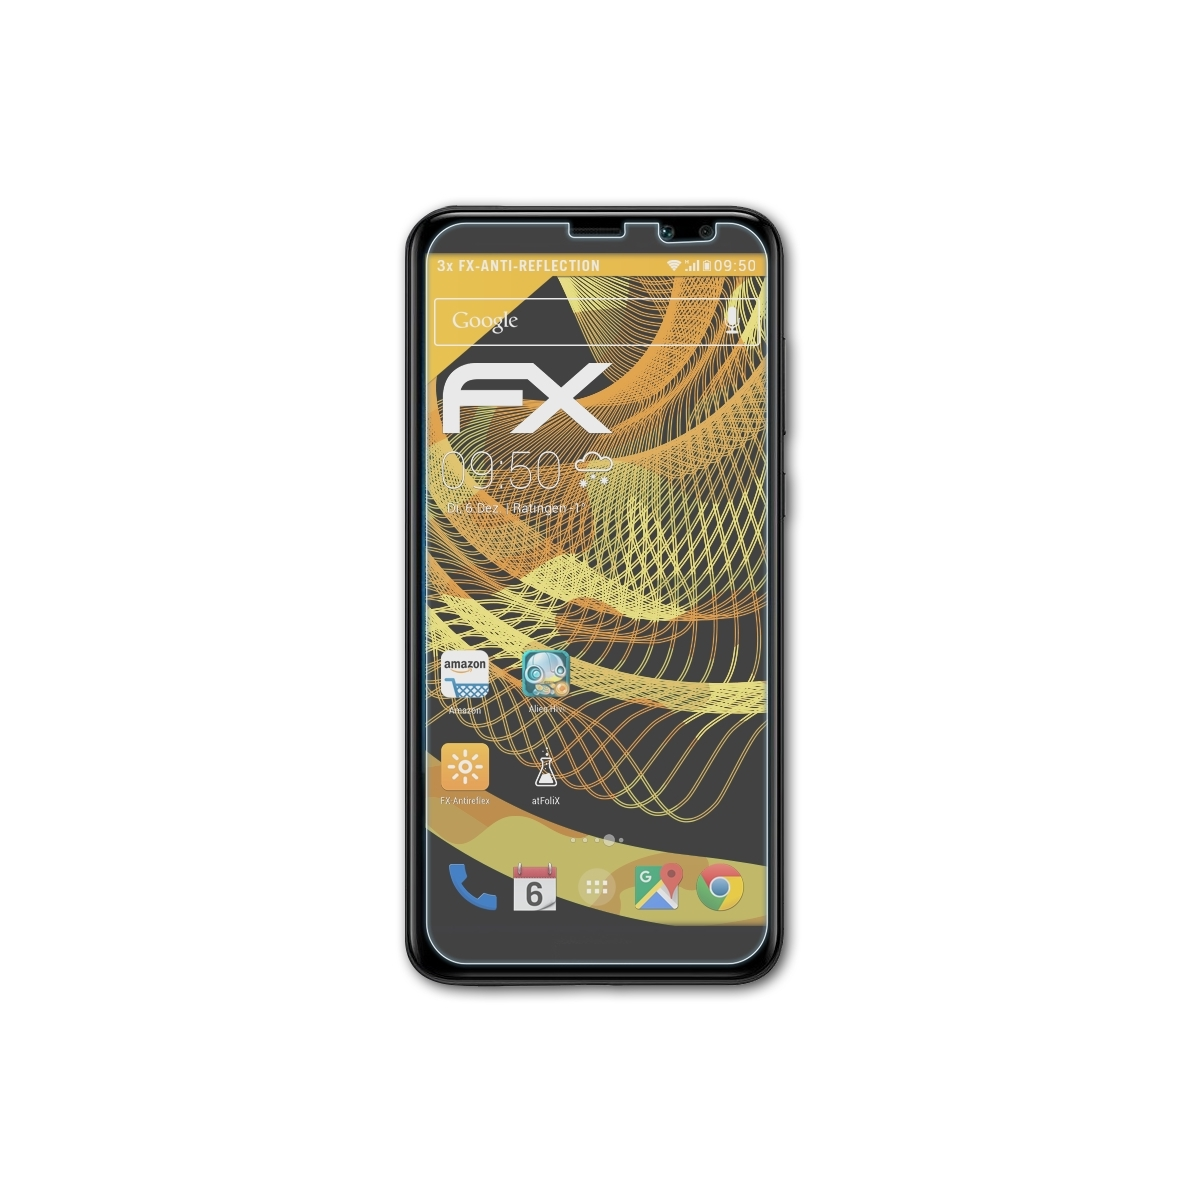 ATFOLIX FX-Antireflex Displayschutz(für 2i) 3x Huawei Nova